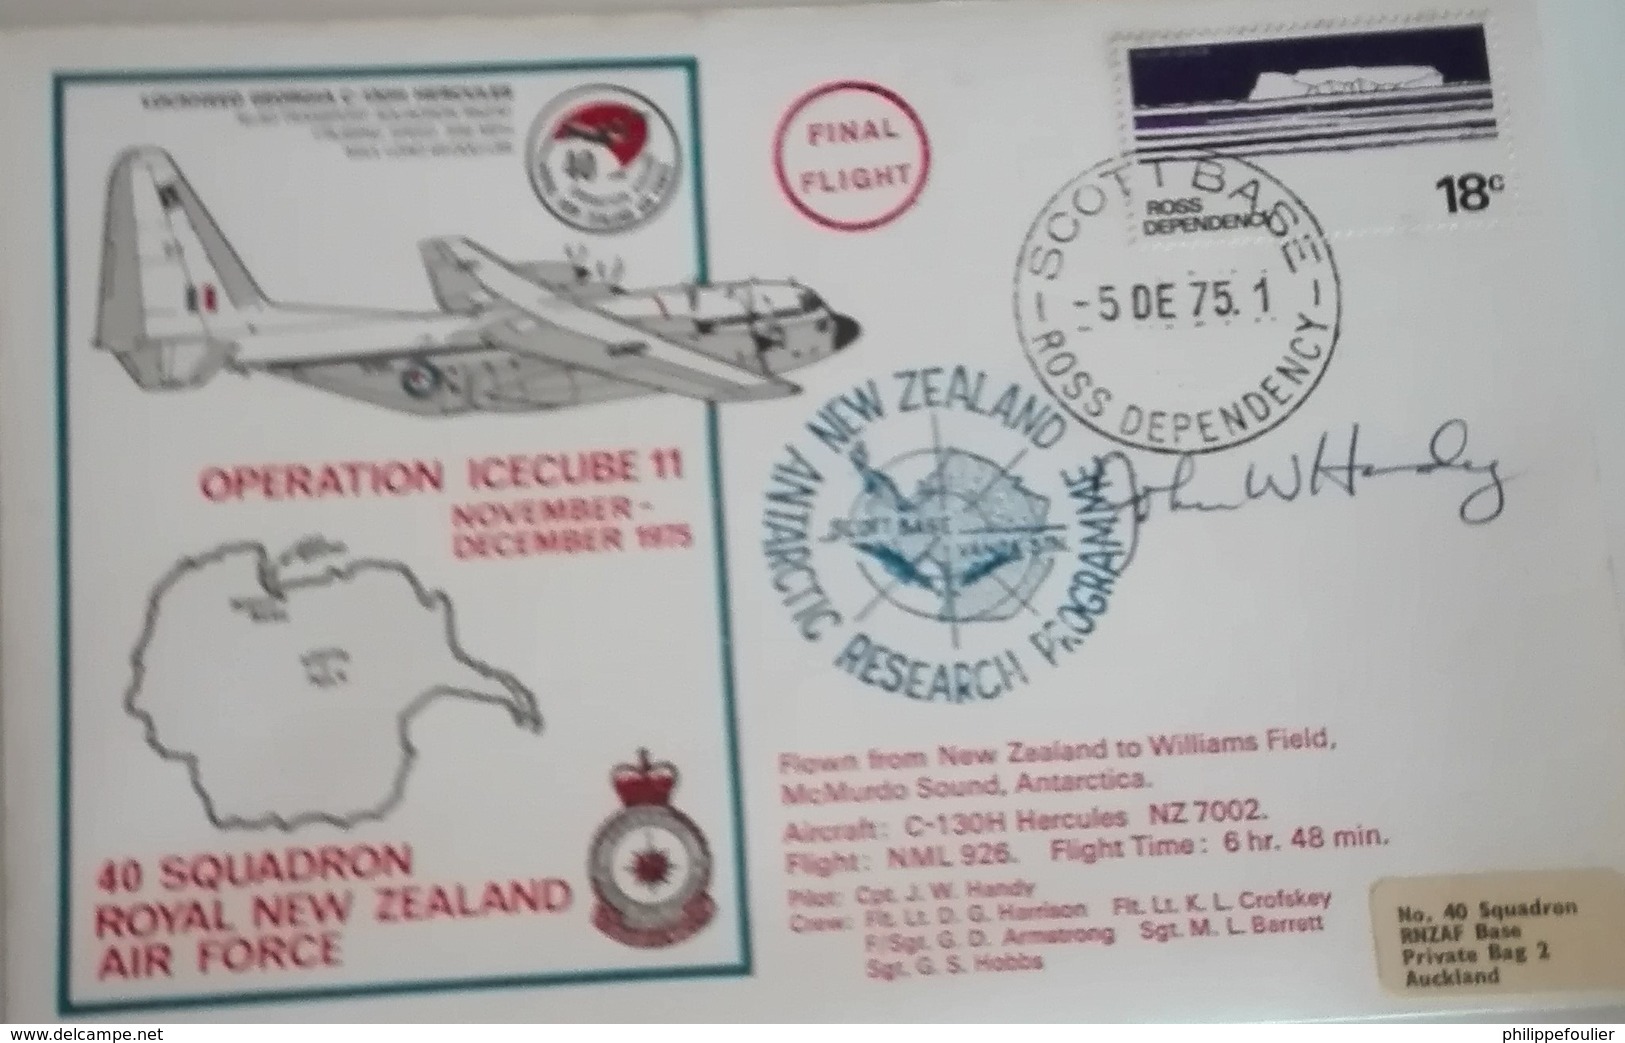 Plis aériens SCOTT Base -  Operation Icecube 11 - nov & dec. 1975 - Flight Cover 40 Sqd. Royal New Zeland Air F  signé